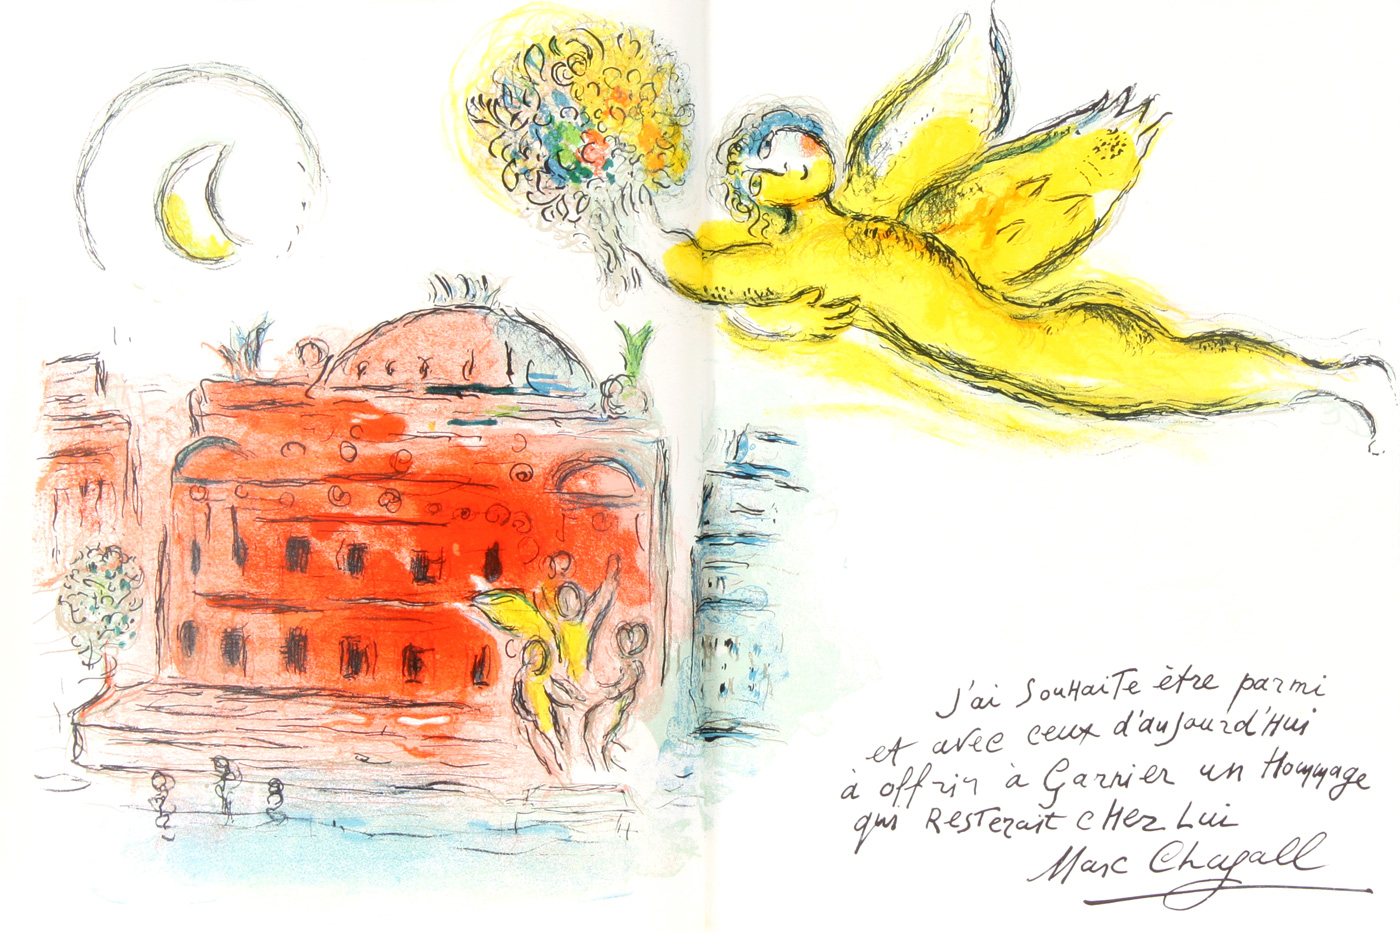 Hommage a Garnier - Le Plafond de L'opera de Paris Par Marc Chagall - Original Lithography - ליתוגרפיה מקורית מאת מארק שאגאל